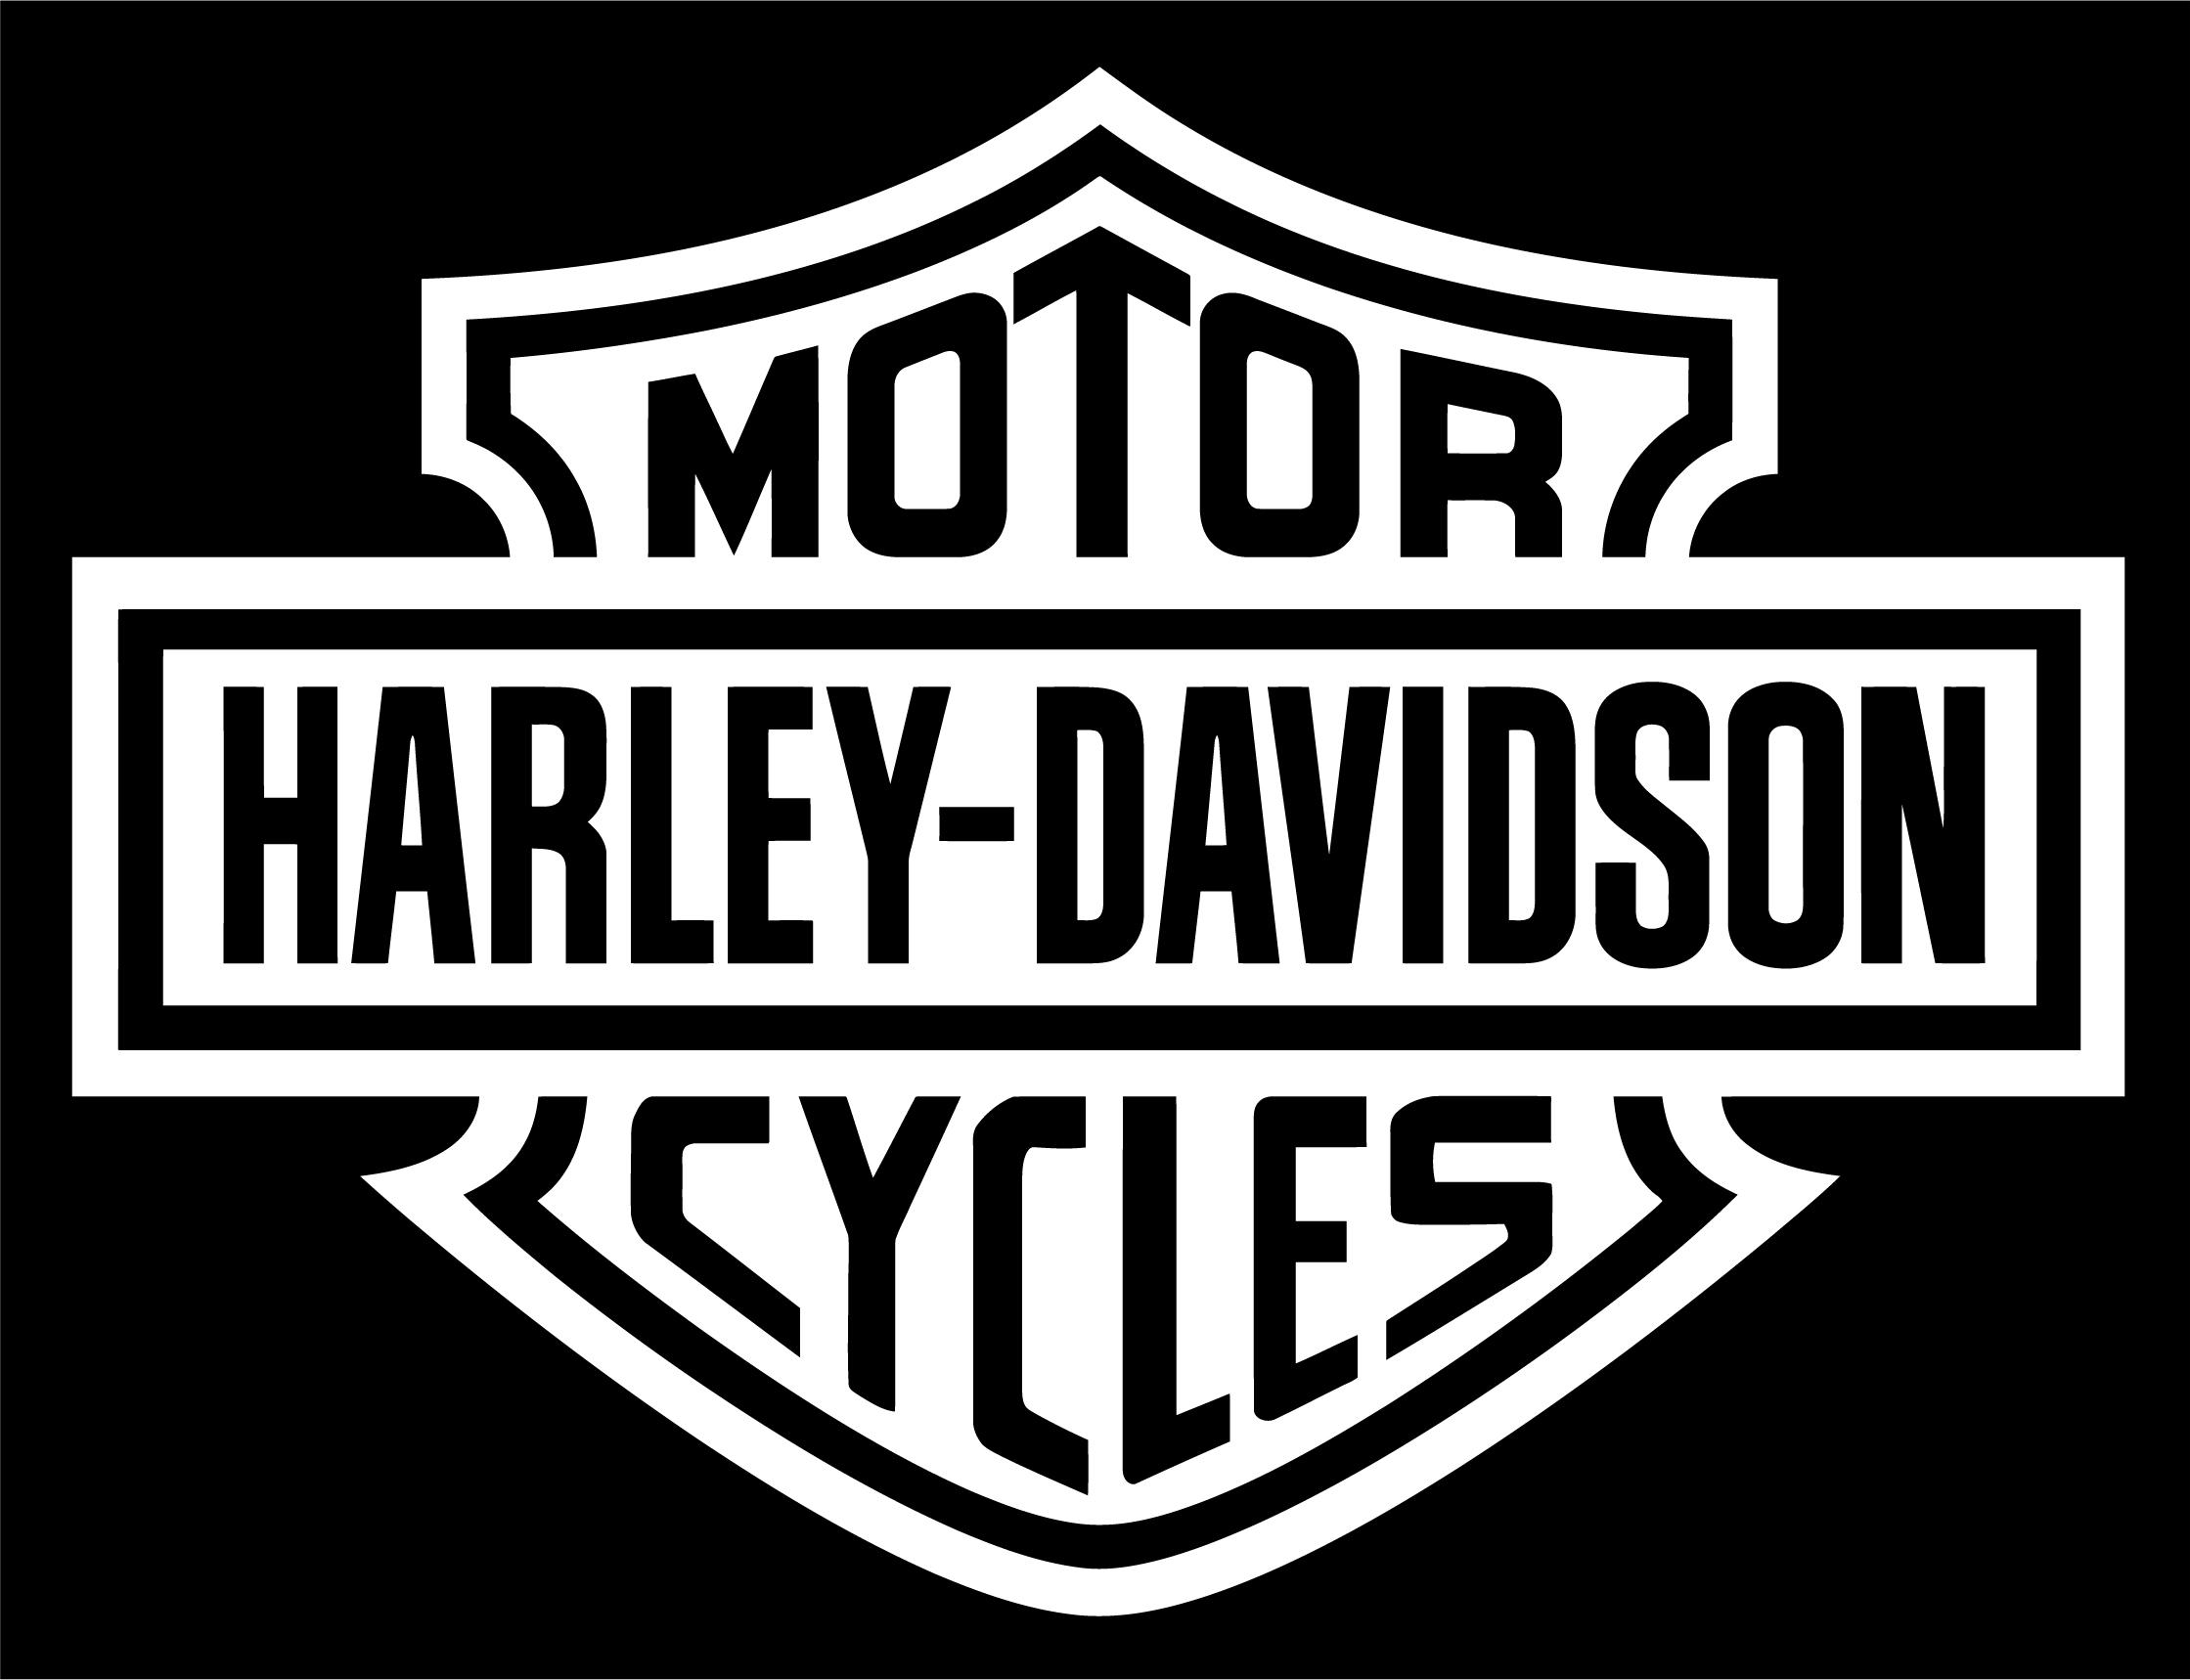 Gigante Harley Davidson HD logotipo emblema ADHESIVO DECAL sticker 74cm x 94 nuevo 